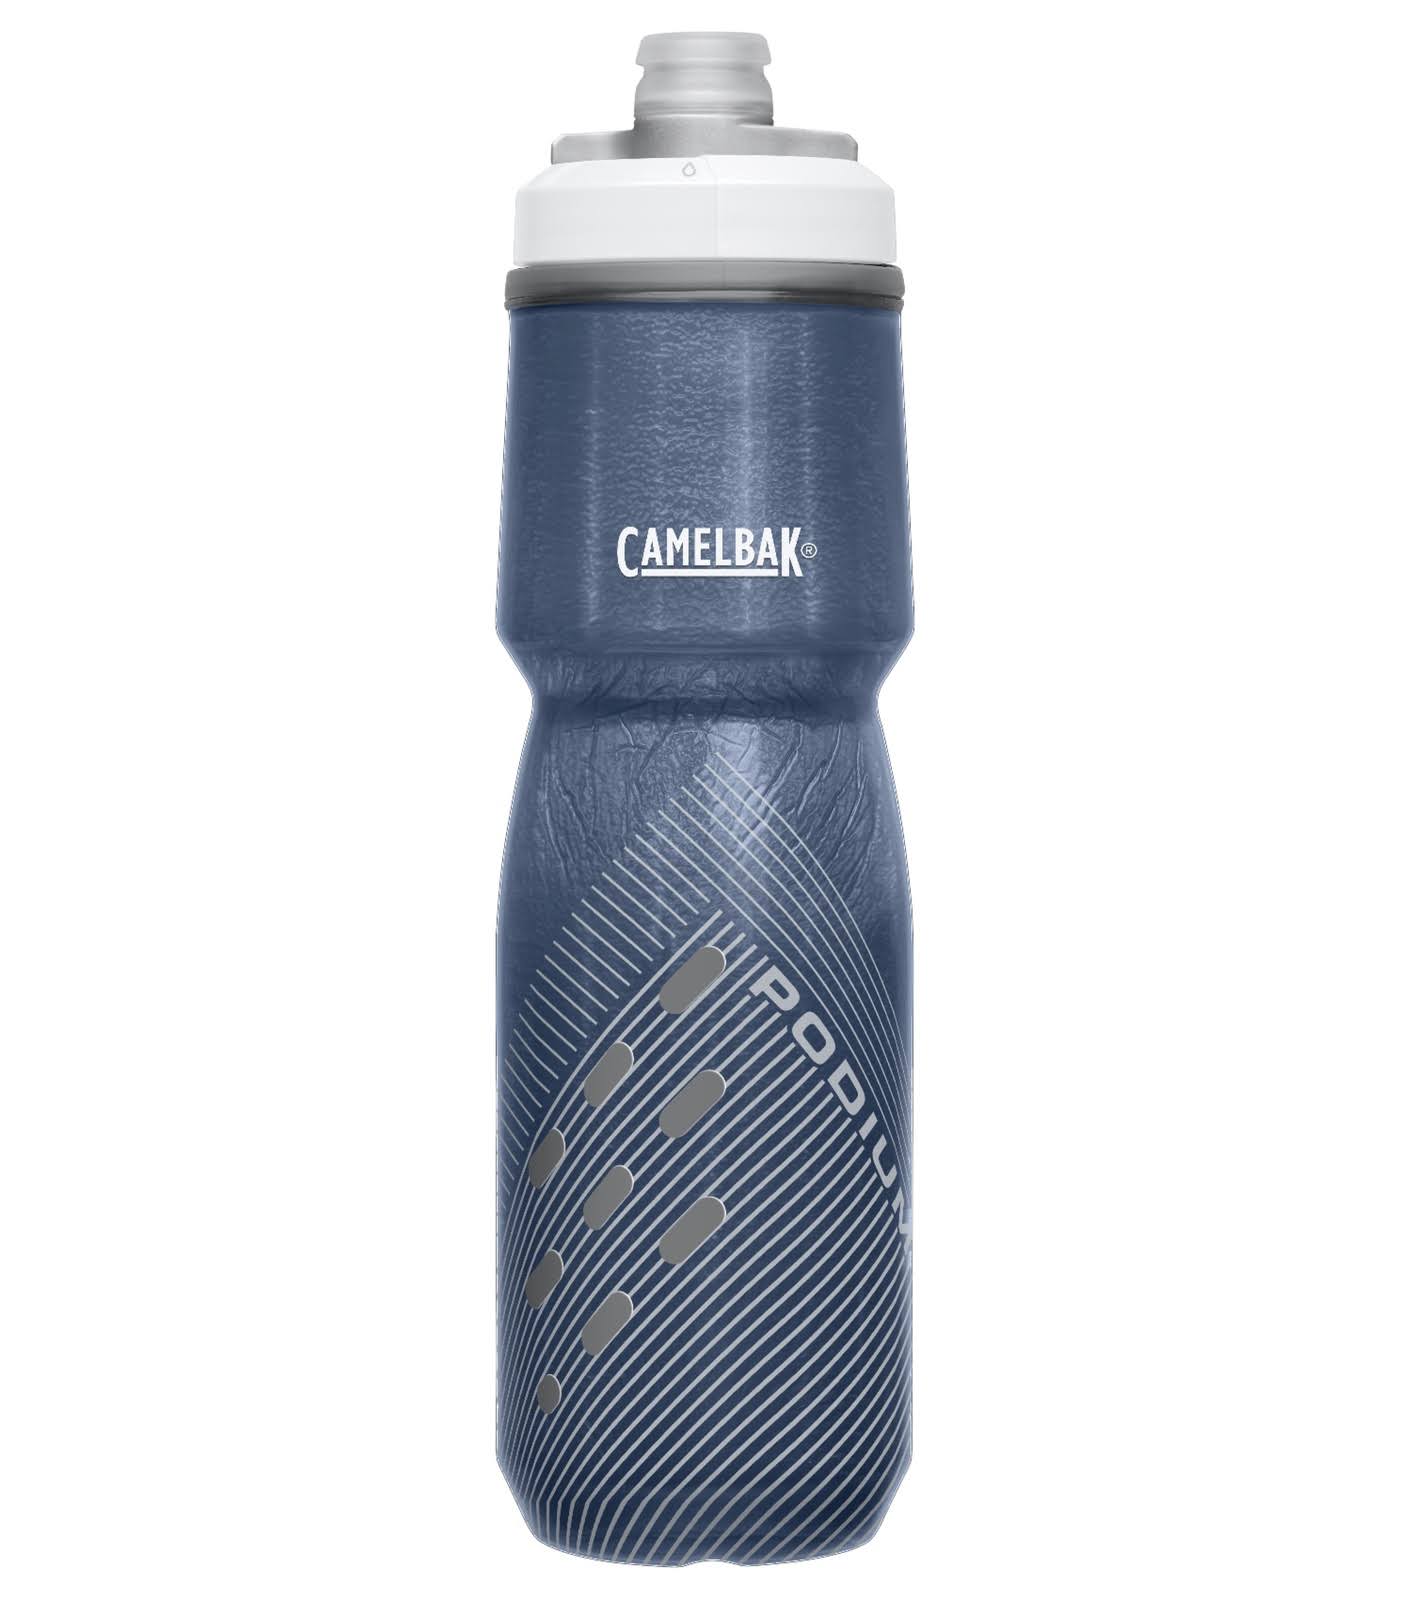 Camelbak Podium Bottle Chill 700ml - Navy Perforated